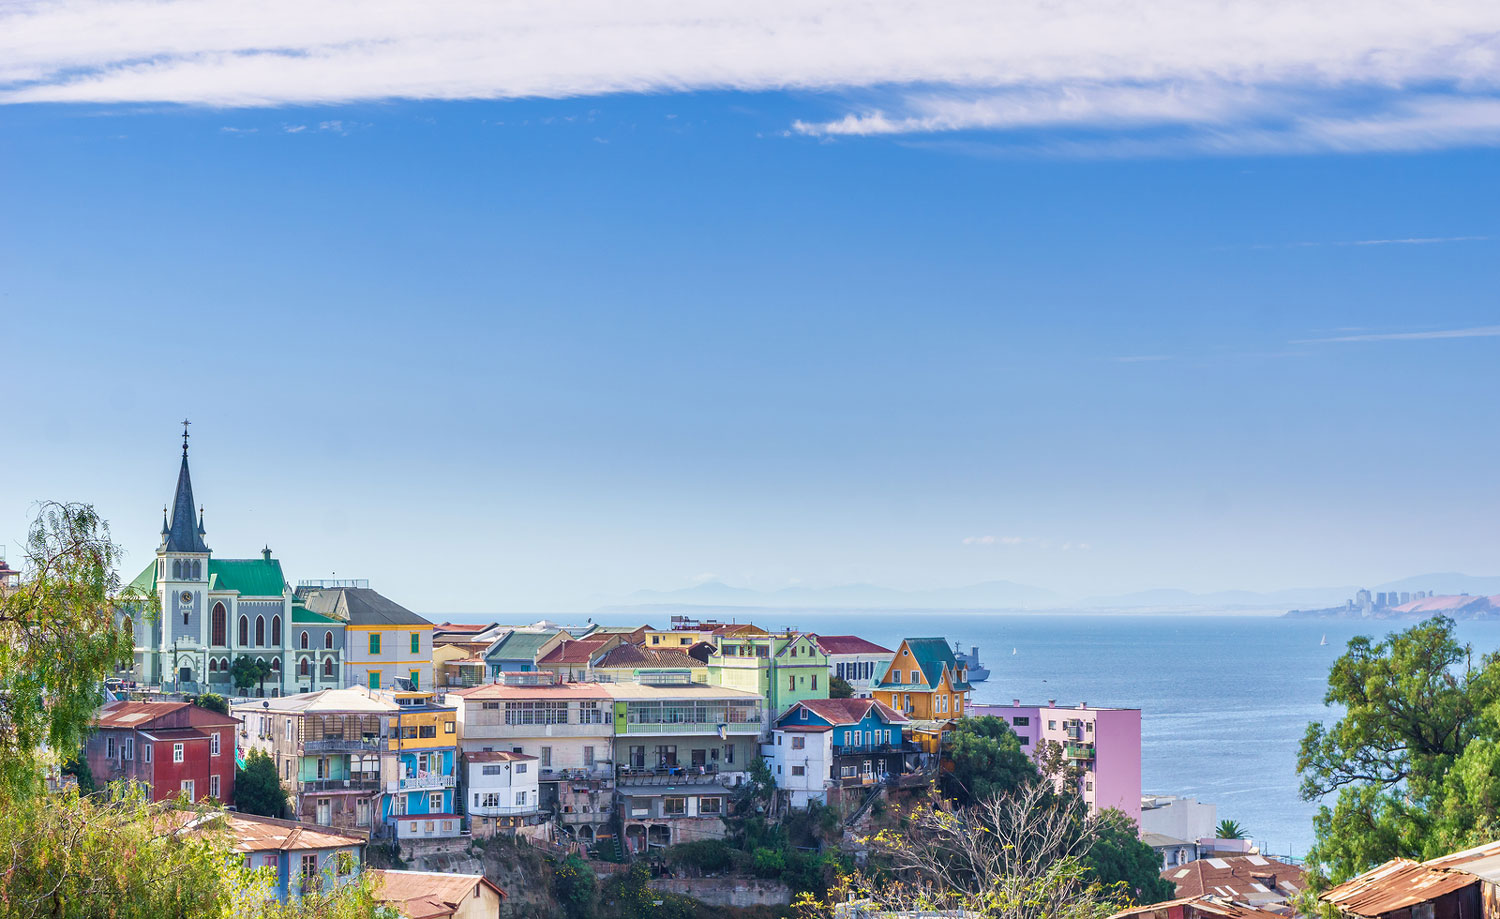 Cityscape view of colorful UNESCO World Heritage Site, Valparaiso in Chile.